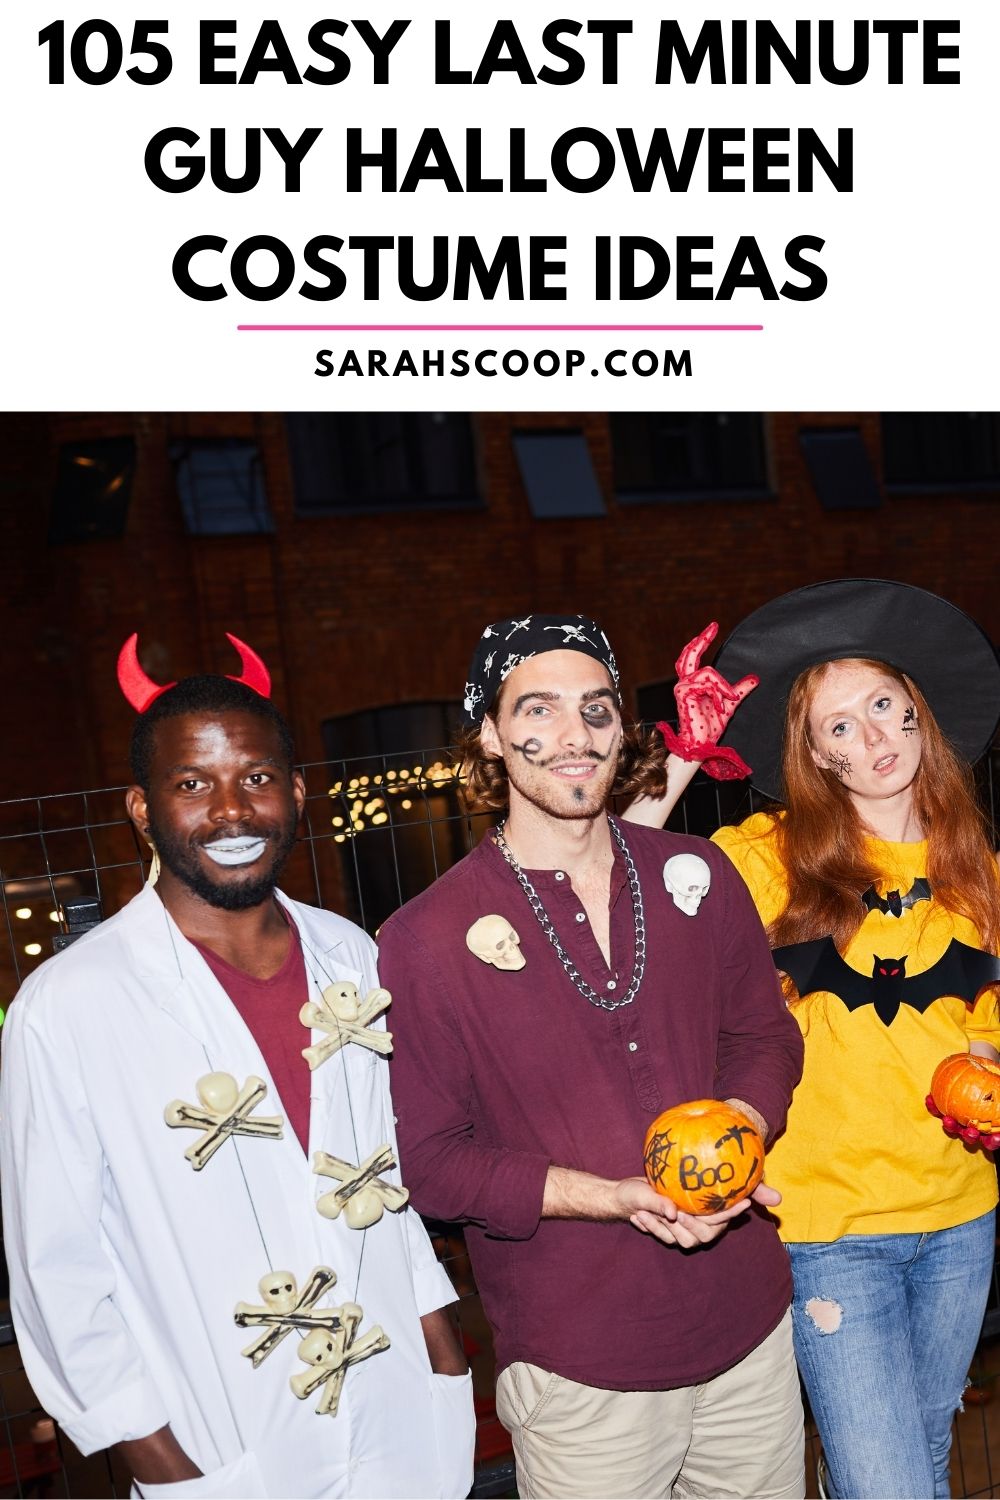 105 Easy Last Minute Guy Halloween Costume Ideas | Sarah Scoop